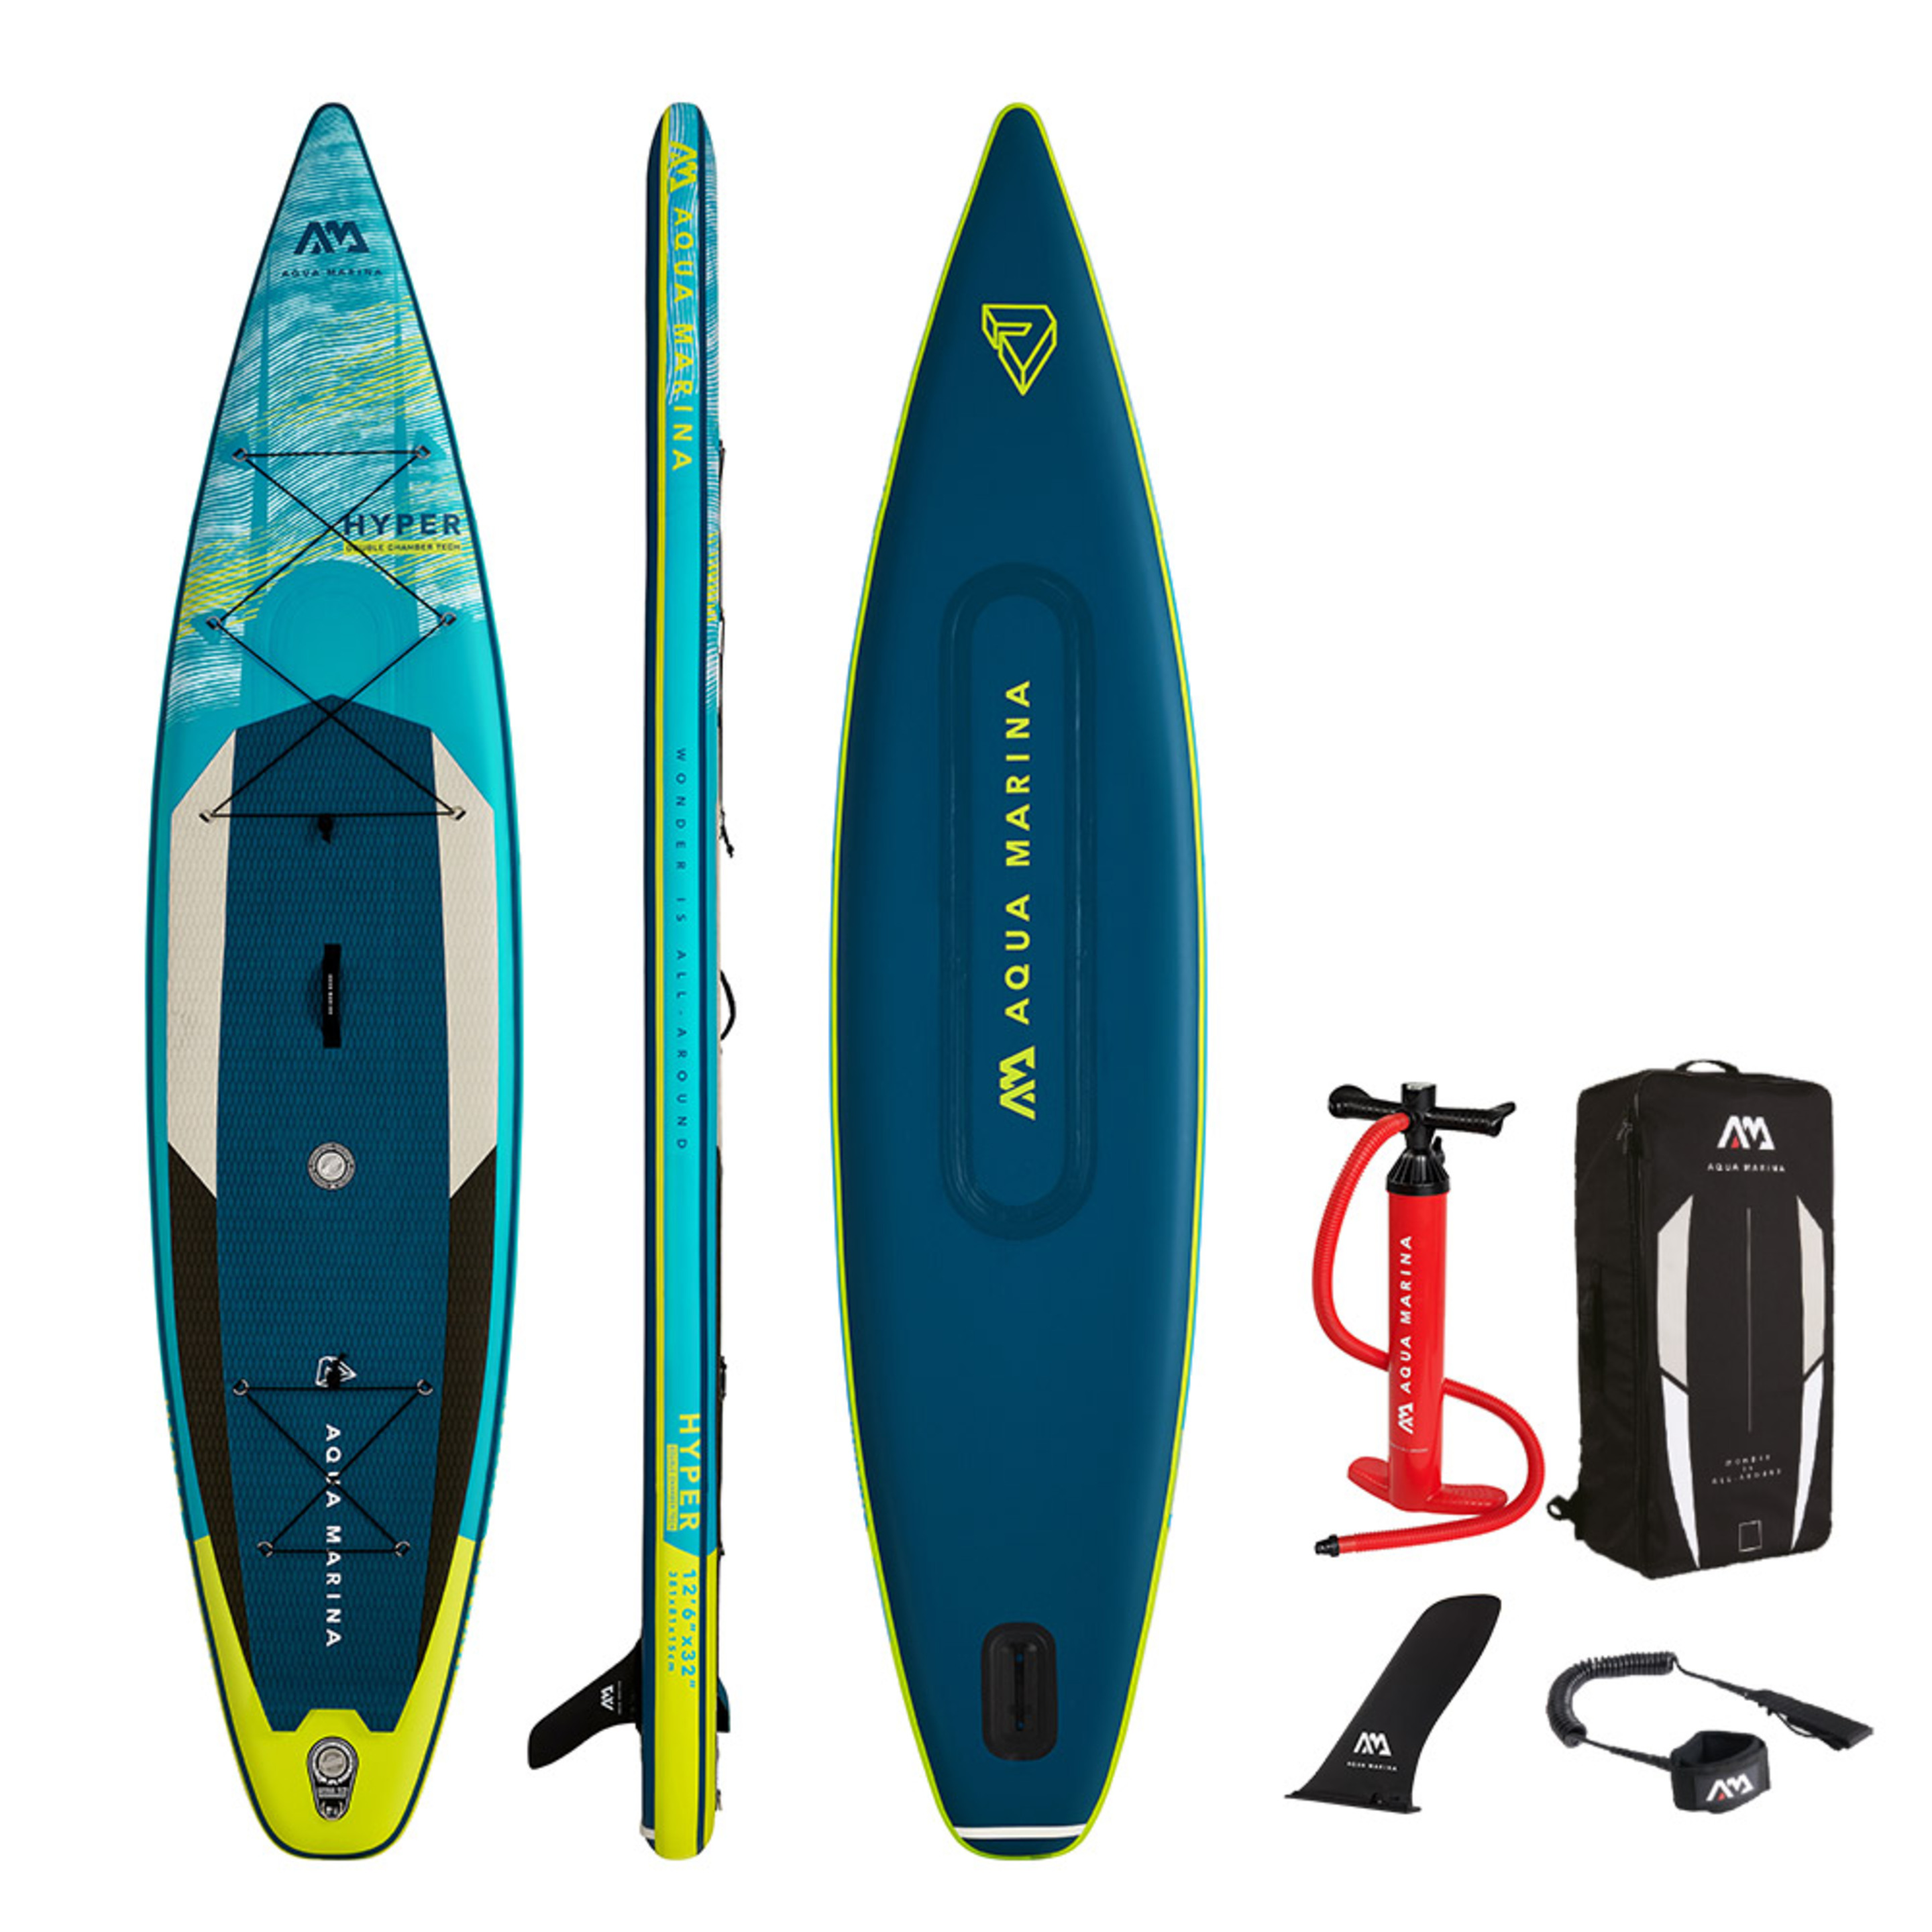 Tabla Paddle Surf Aqua Marina Hyper 12? 6? - Amarillo/Azul - Touring Series  MKP